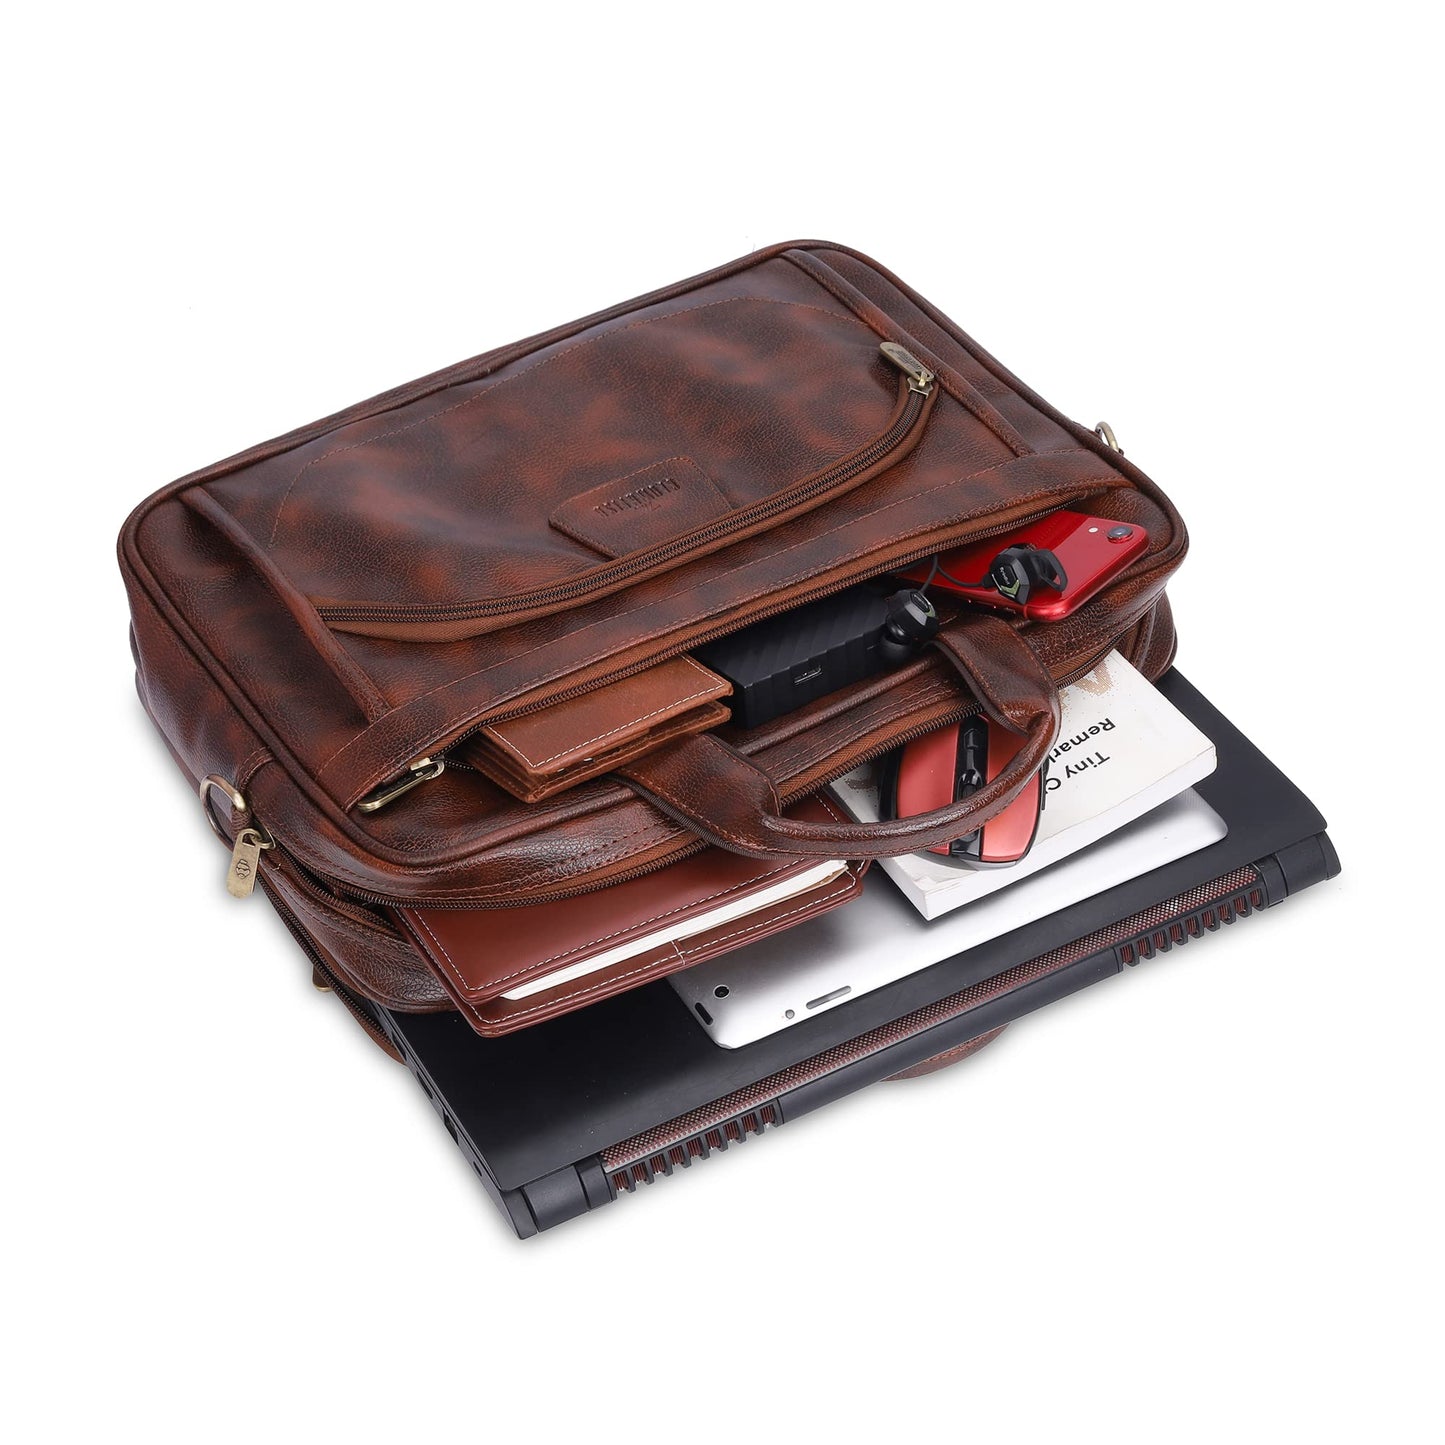 THE CLOWNFISH Unisex-Adult 11 Litre Faux Leather 15.6 Inch Laptop Messenger Bag Briefcase (Tan)